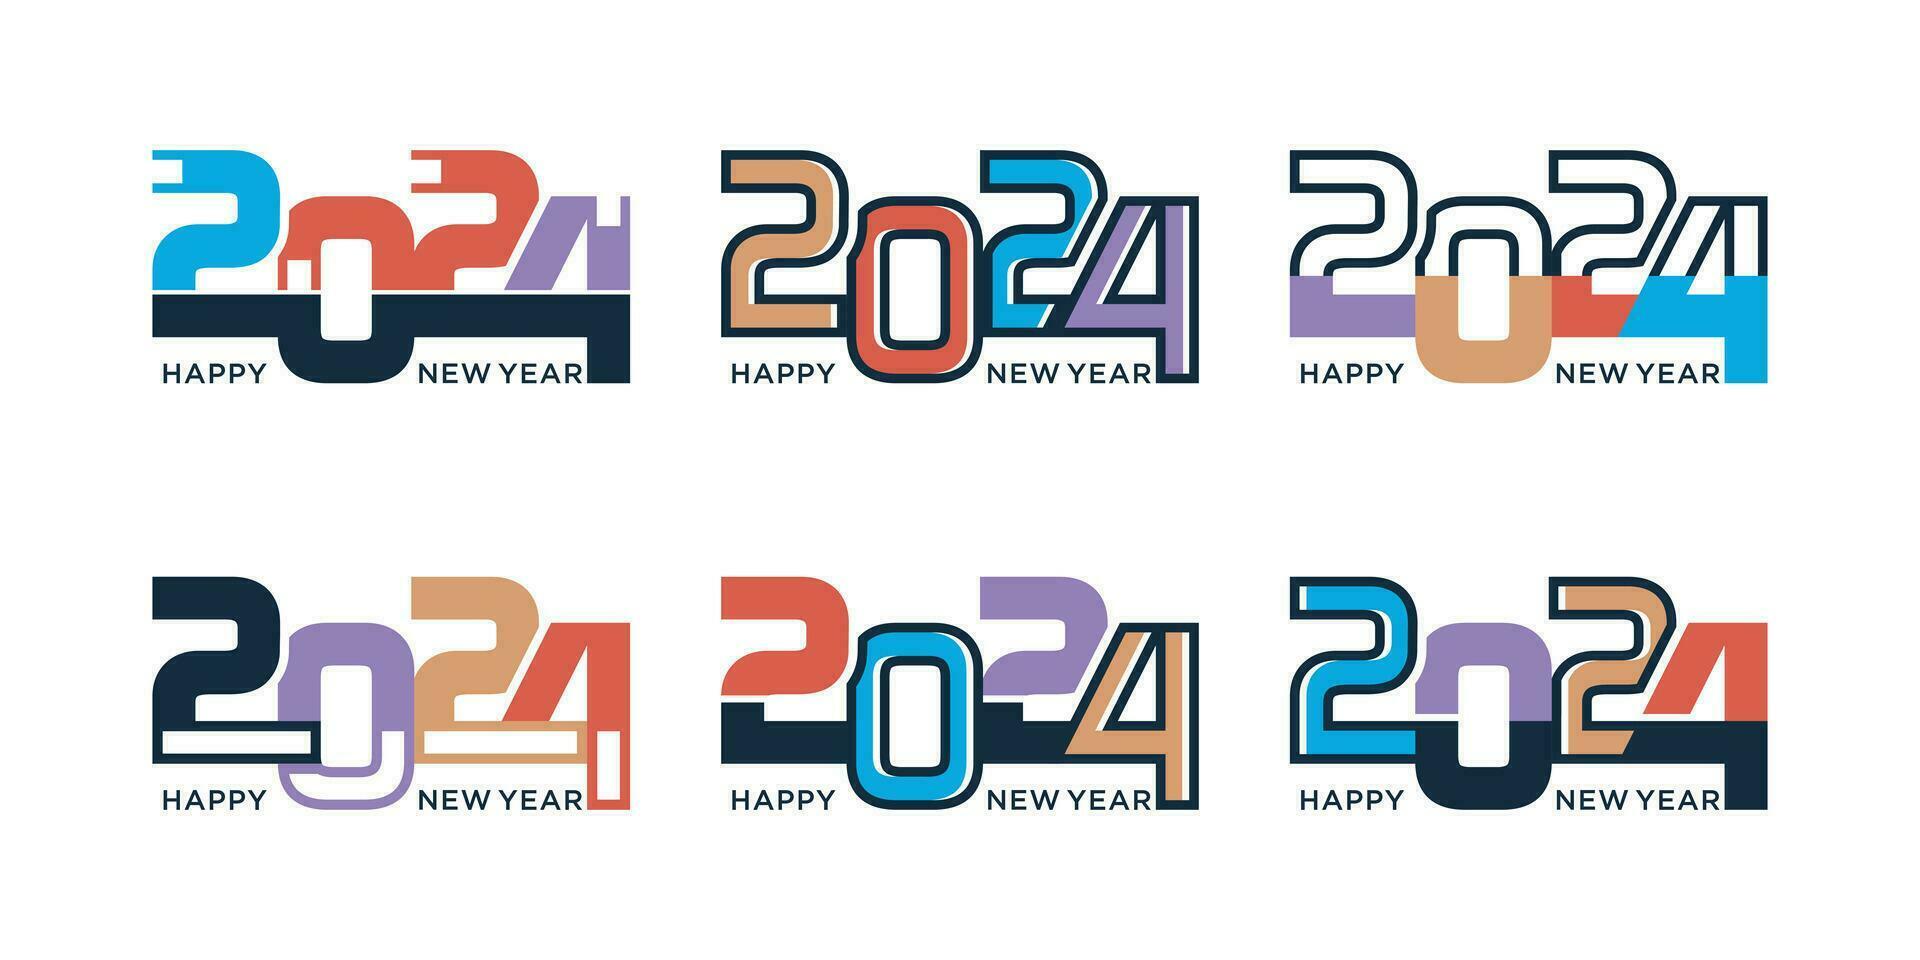 2024 contento nuevo año logo diseño modelo vector ilustración con único moderno concepto